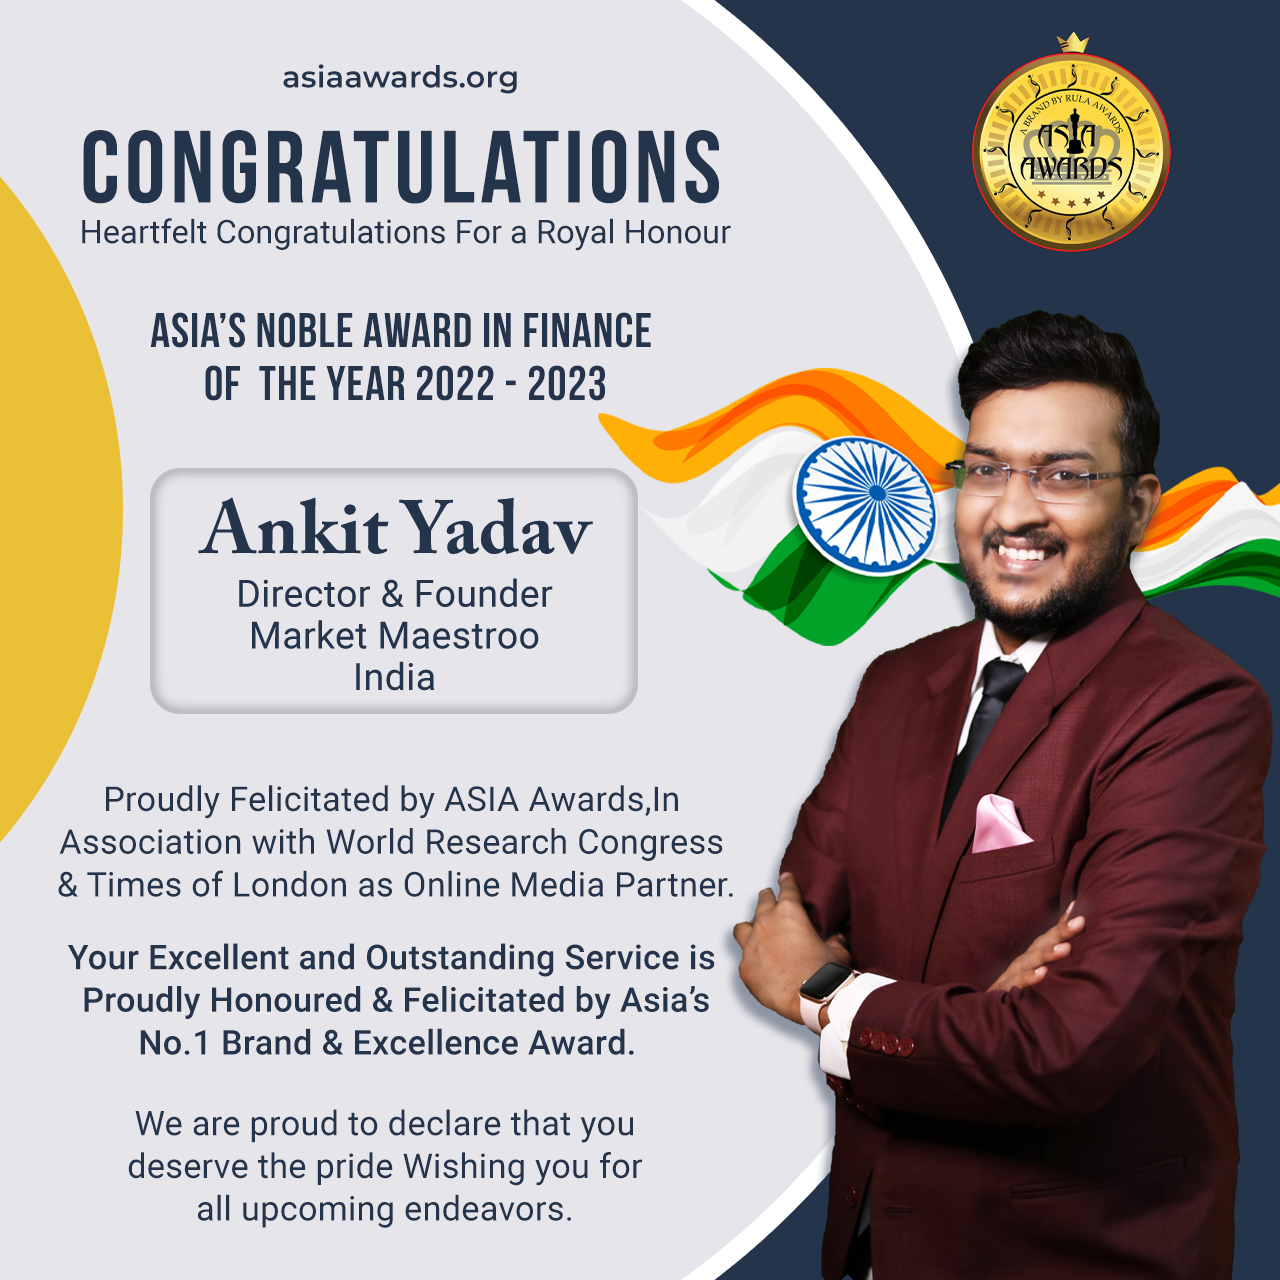 Ankit Yadav has bagged Asia's Noble Award in Finance